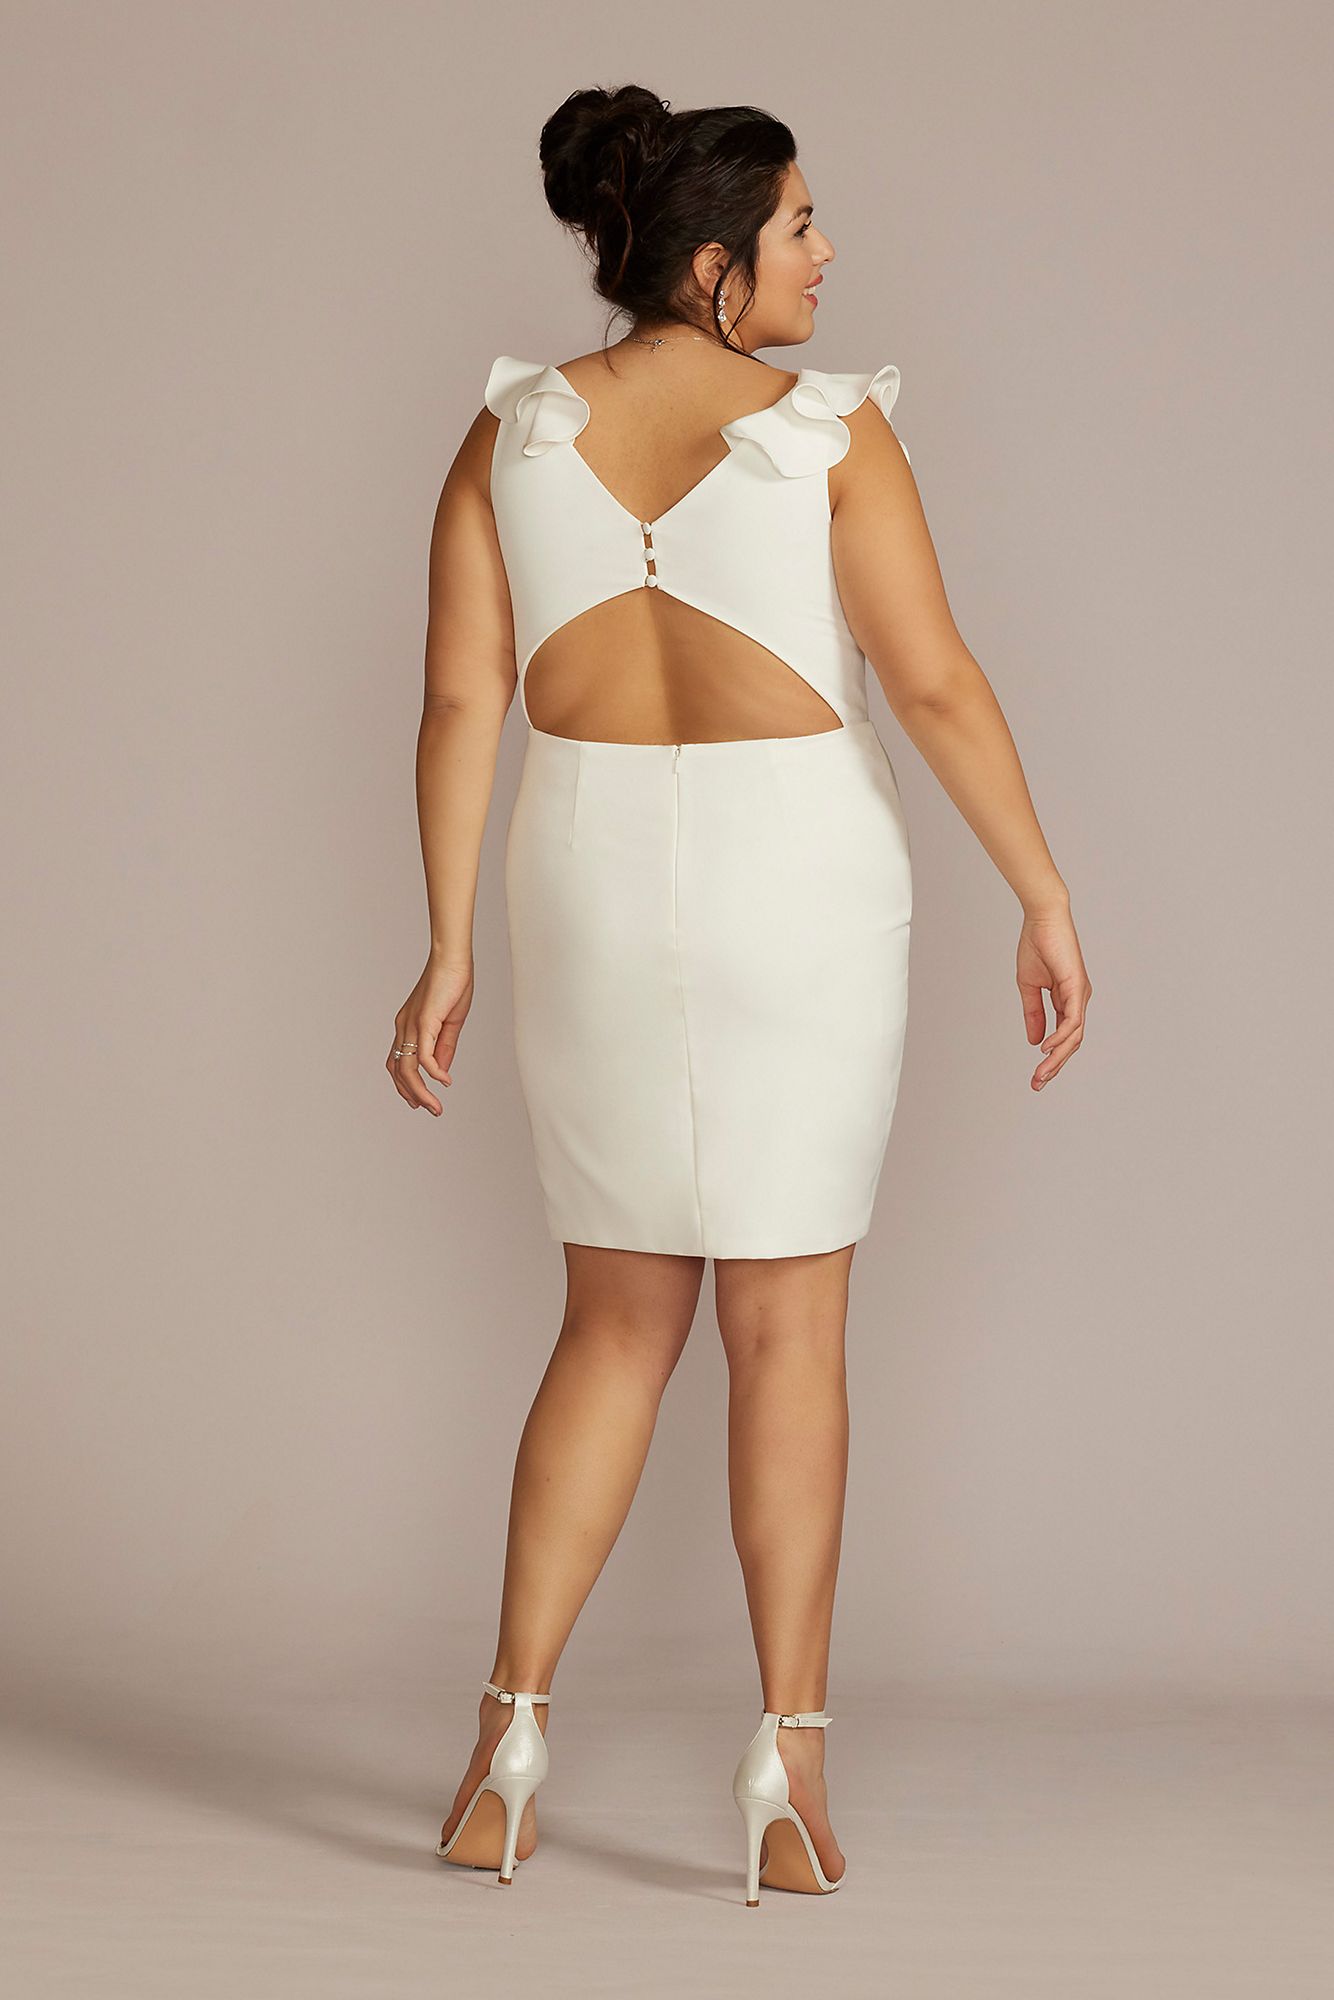 V-Neck Ruffle Short Plus Size Dress with Open Back DB Studio 9SDWG0997